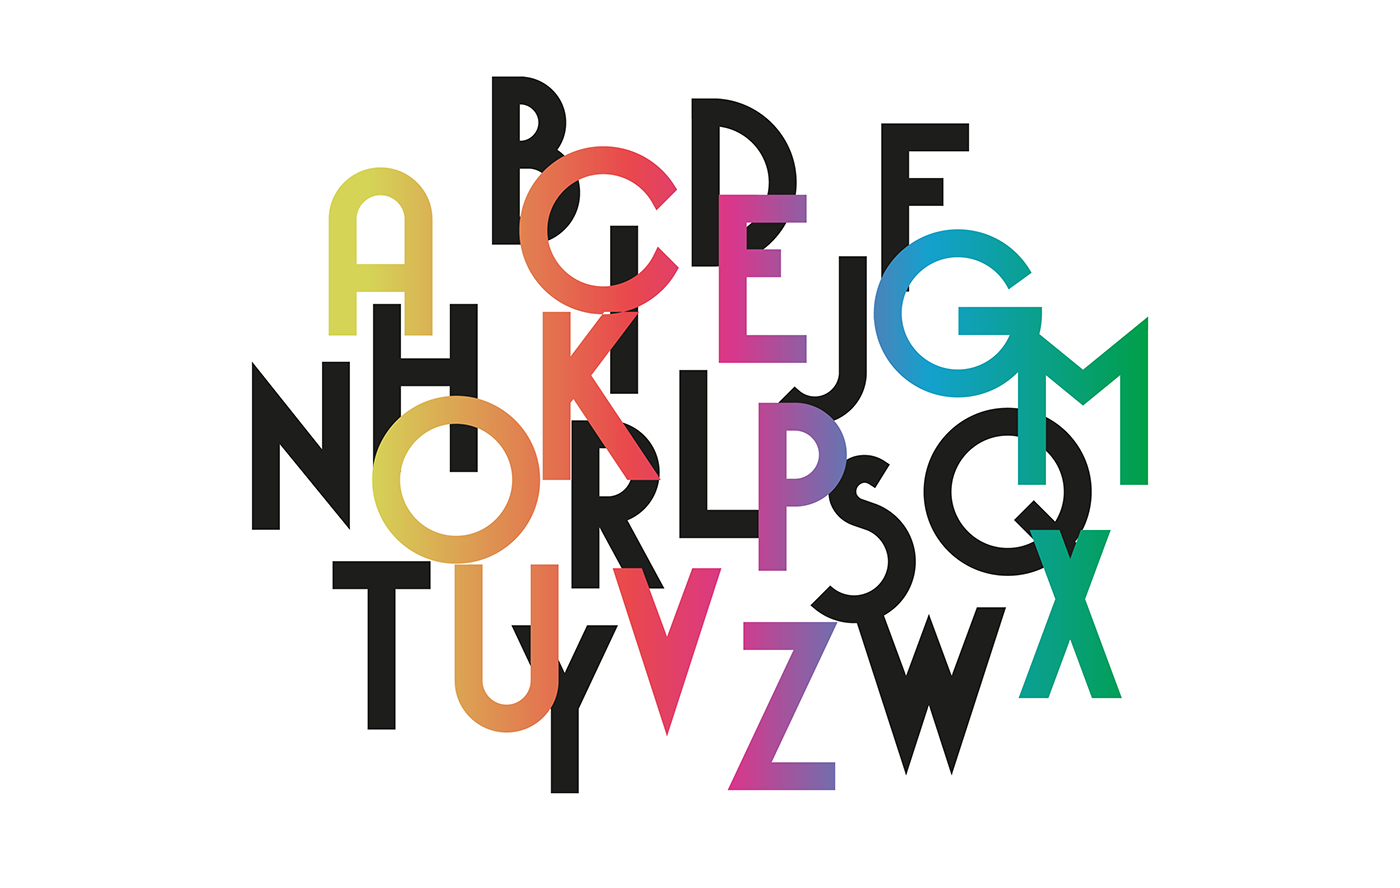 font typo Acme studio Paris Typographie art deco graphisme Typeface identity letters alphabet tipographia poster graphic